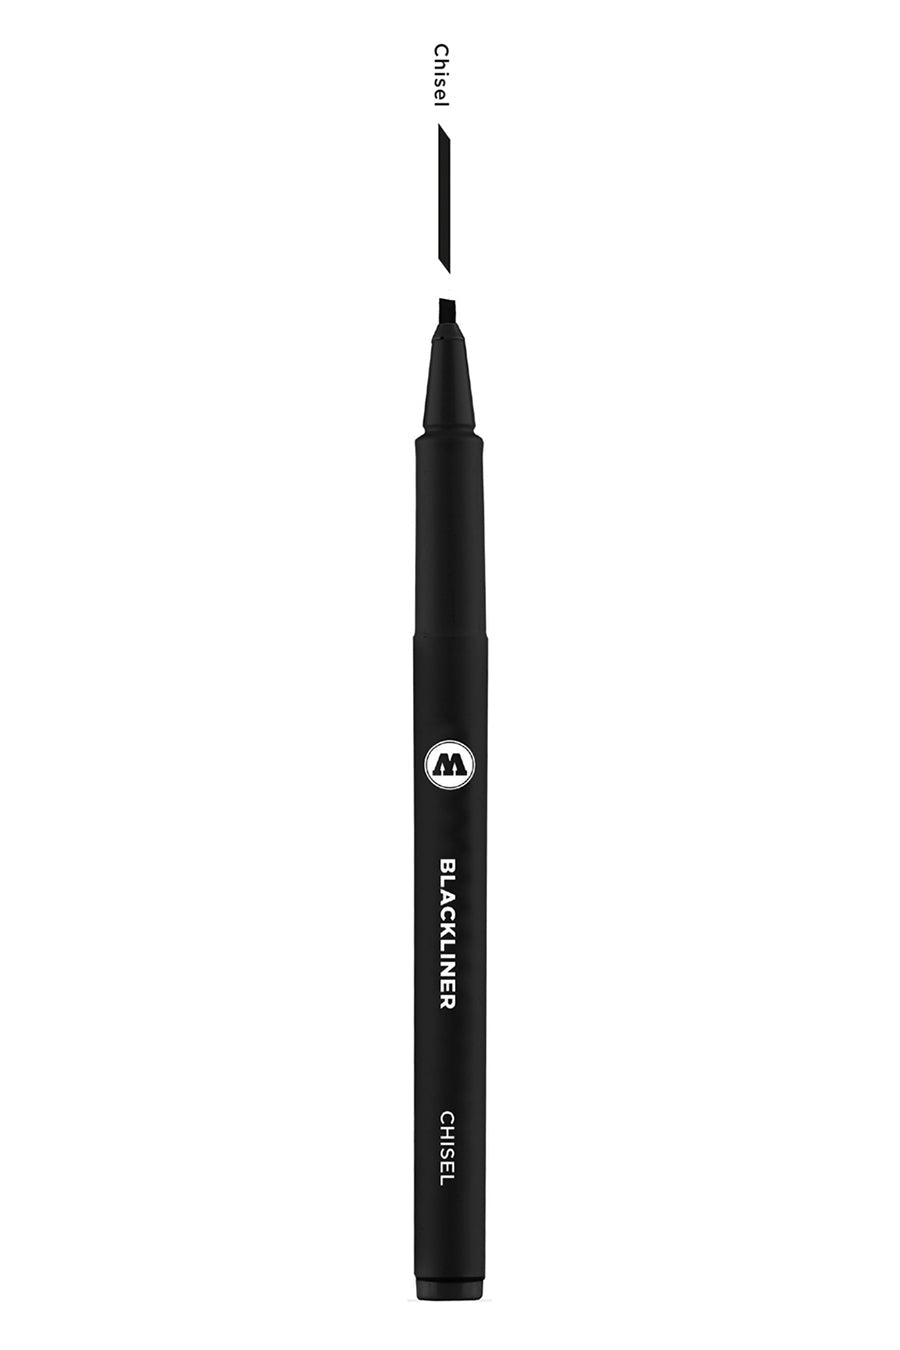 Molotow Blackliner Fineline Pens